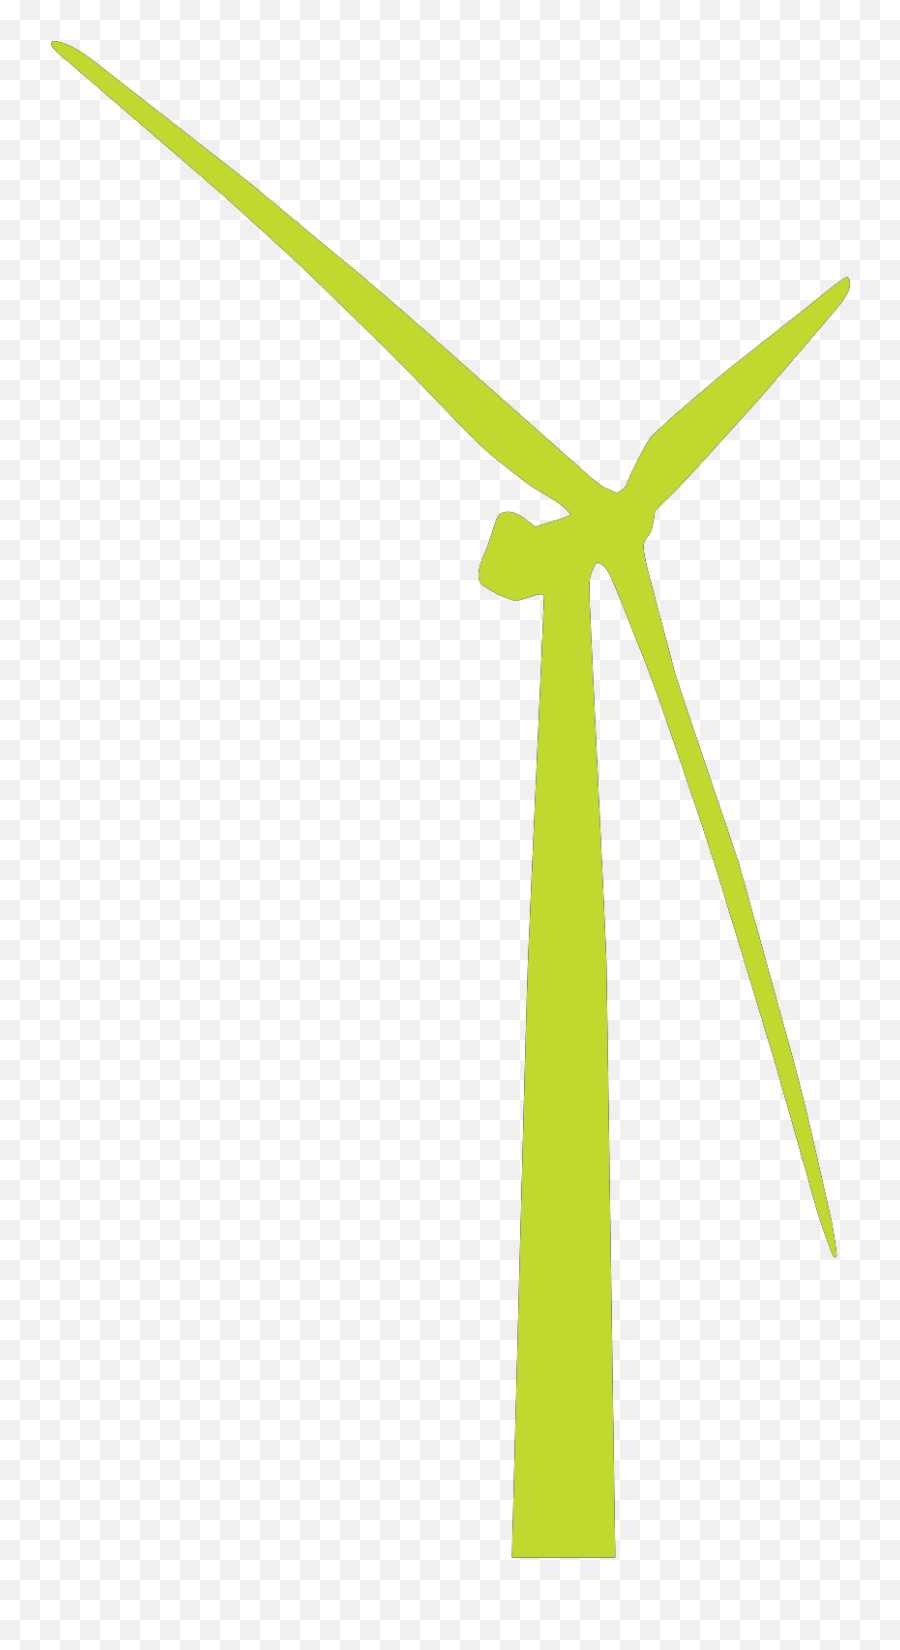 Green Wind Turbine Svg Vector Green Wind Turbine Clip Art Emoji,Wind Turbine Clipart